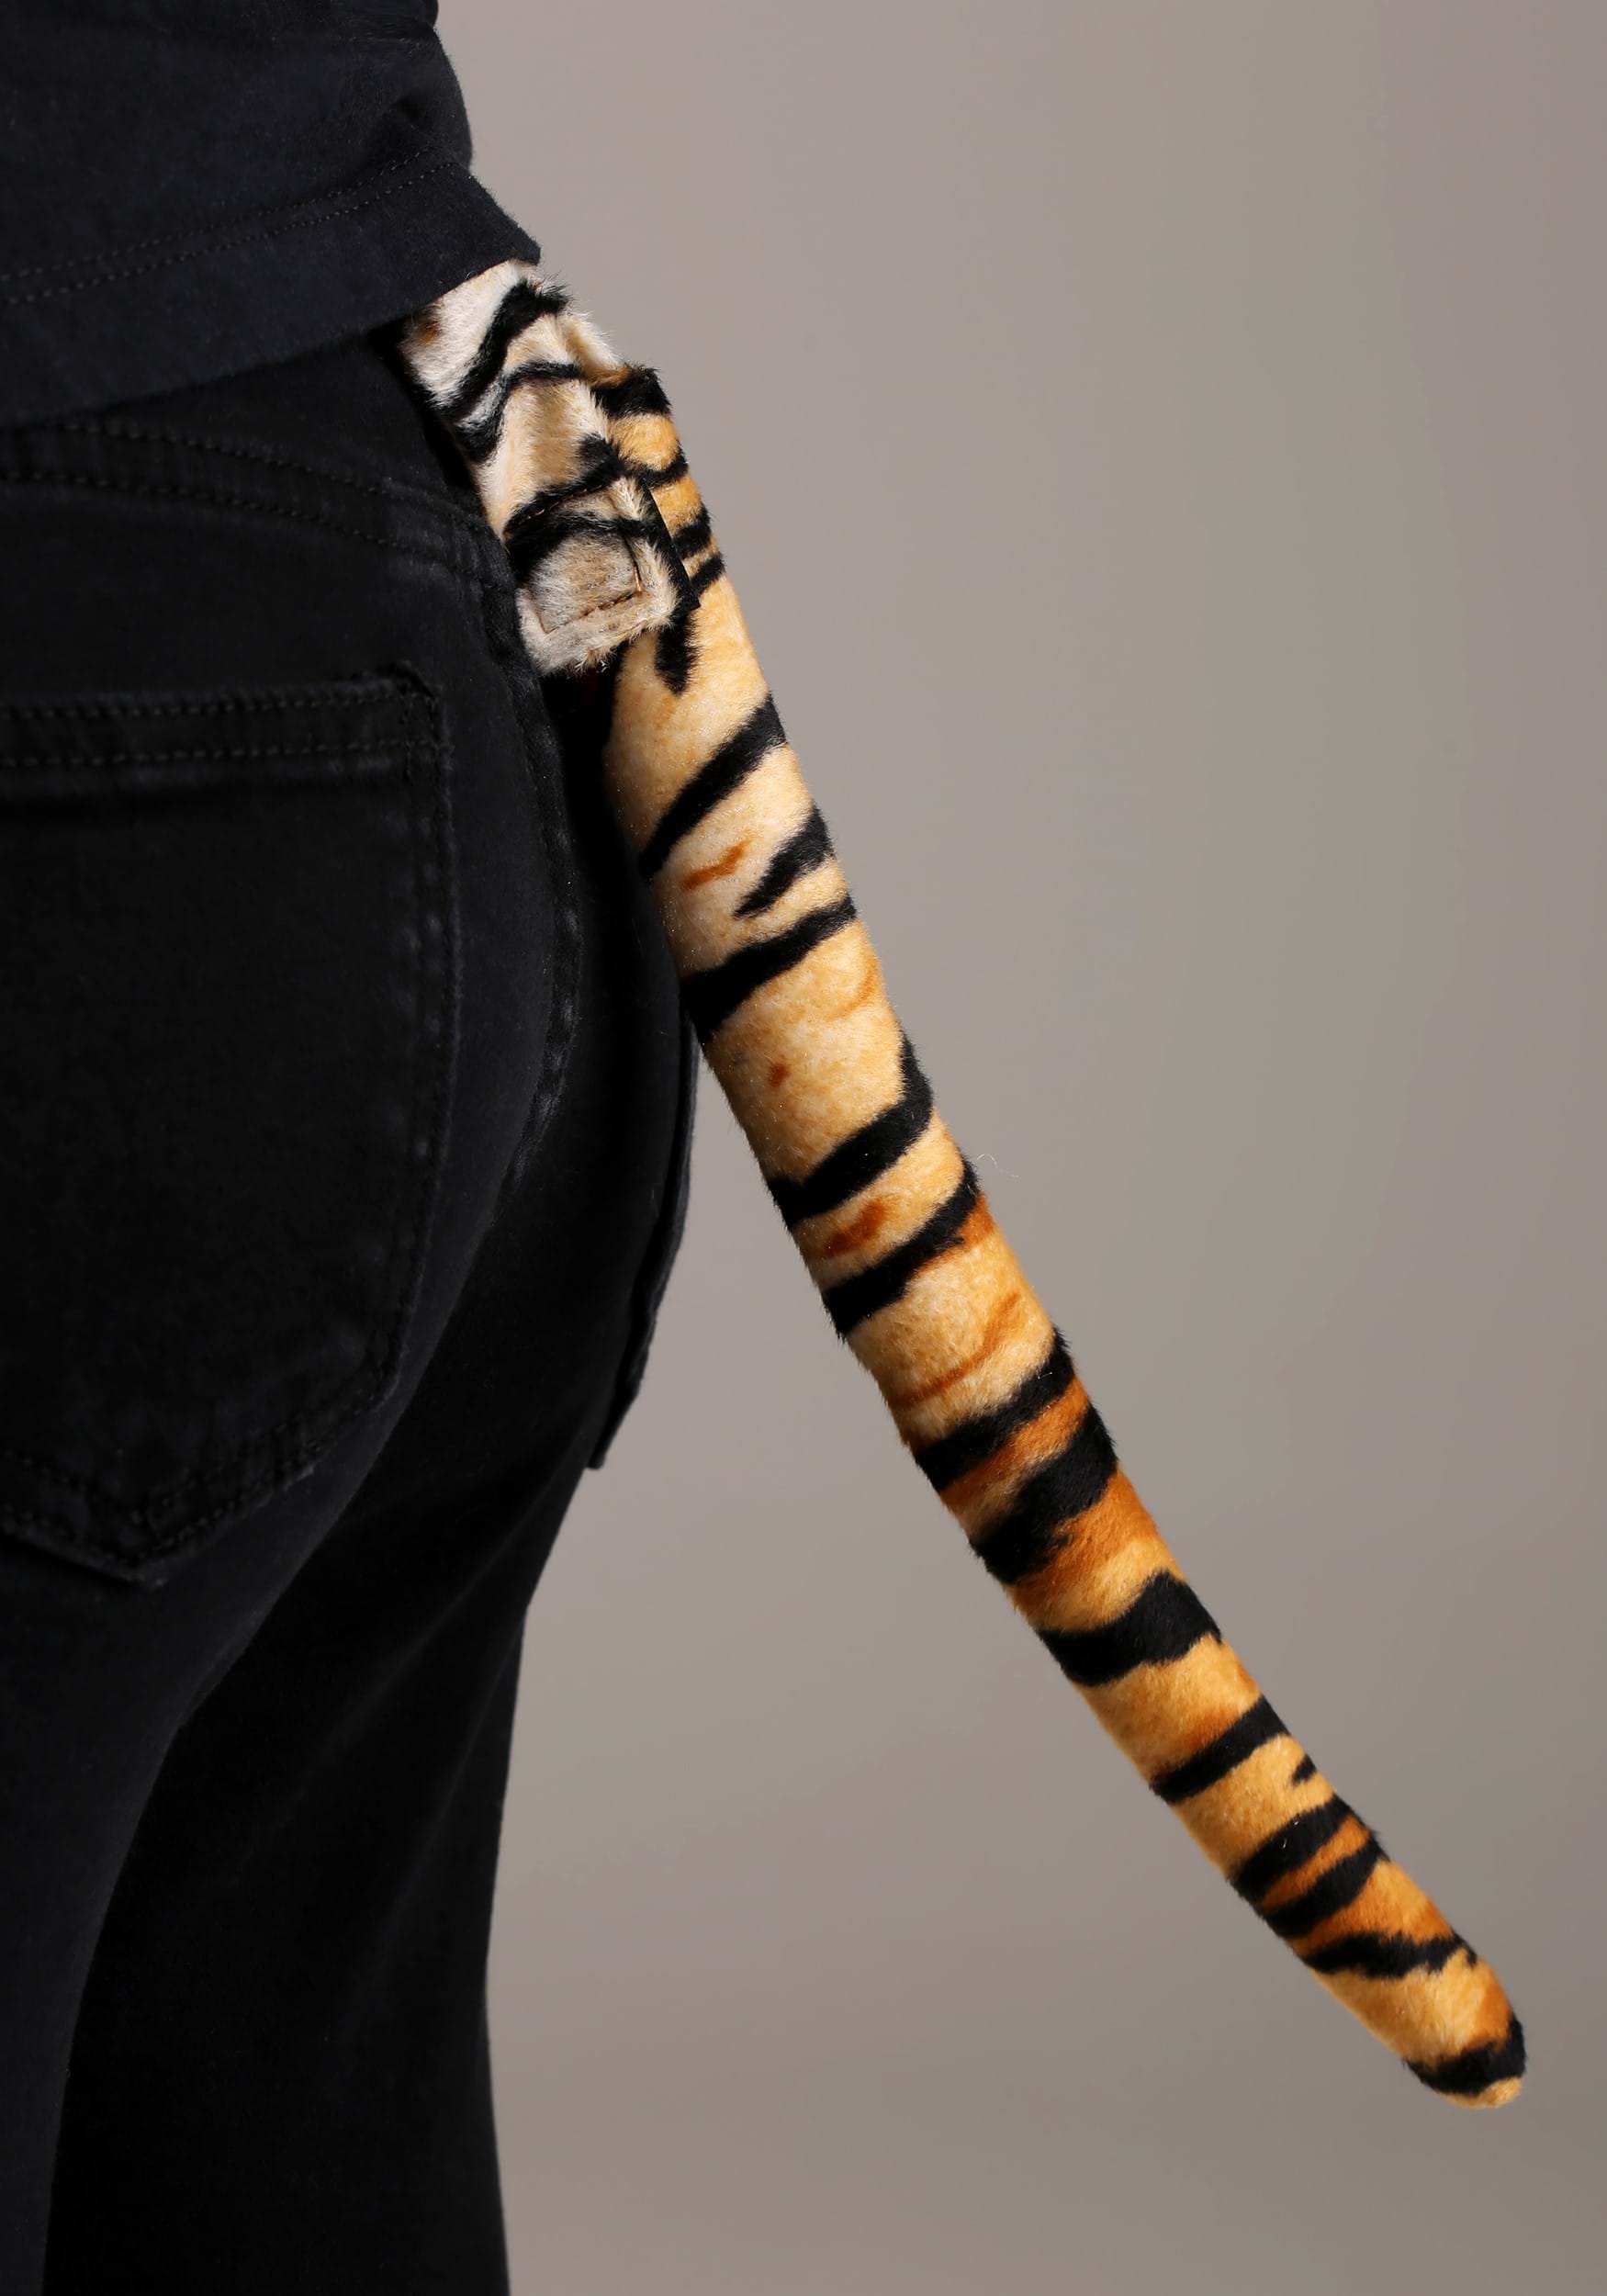 Tiger Headband & Tail Accessory Kit